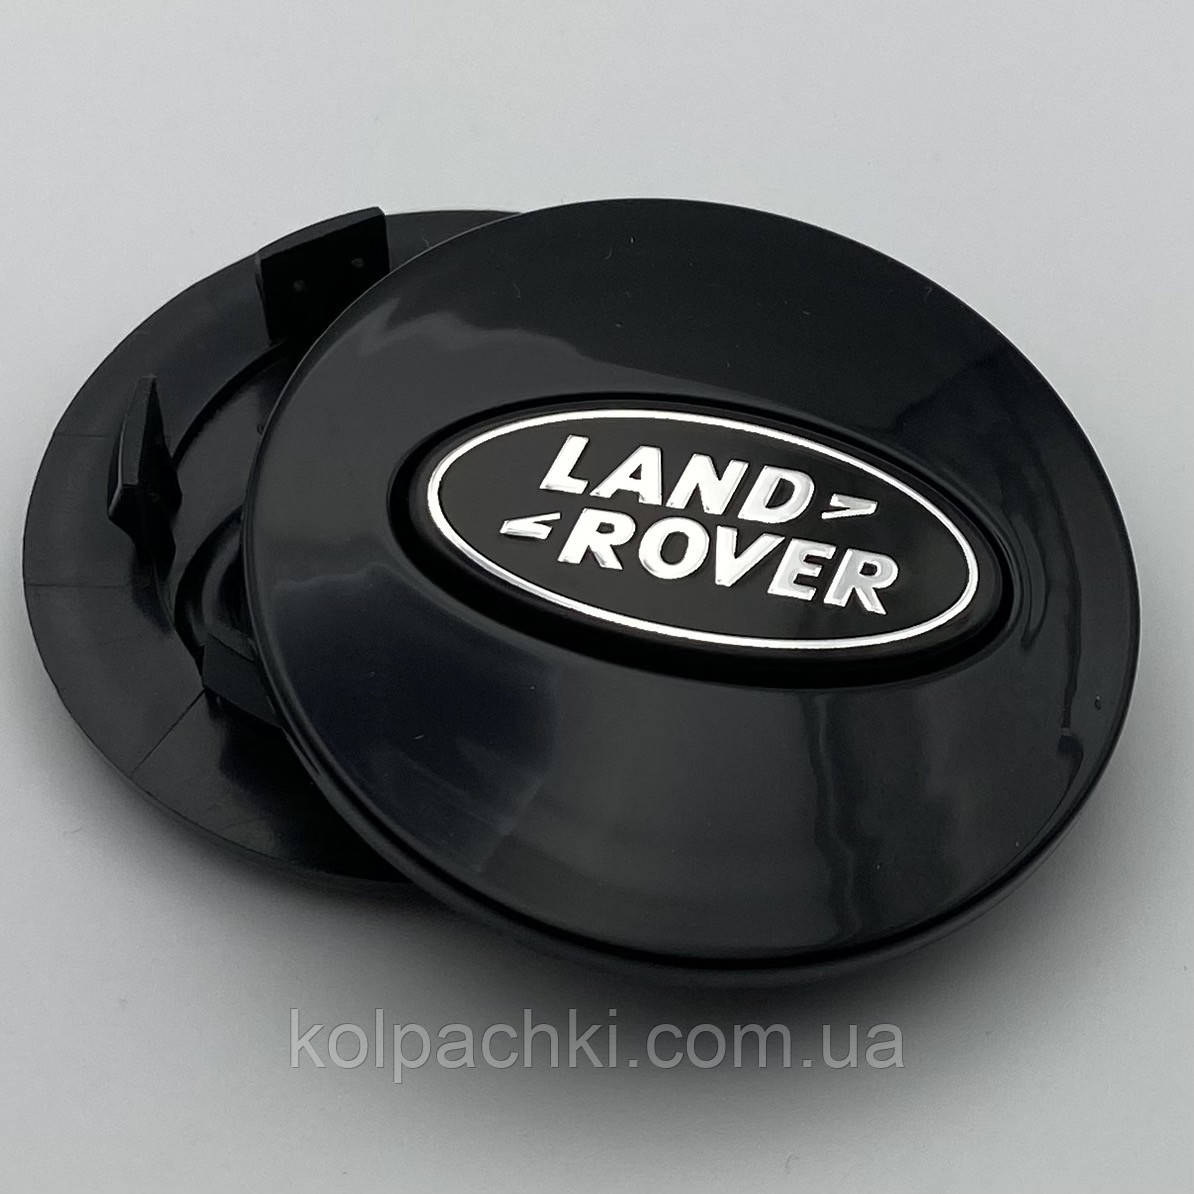 Ковпачок на диски Land Rover BJ32-1130-AB 63 мм 47 мм